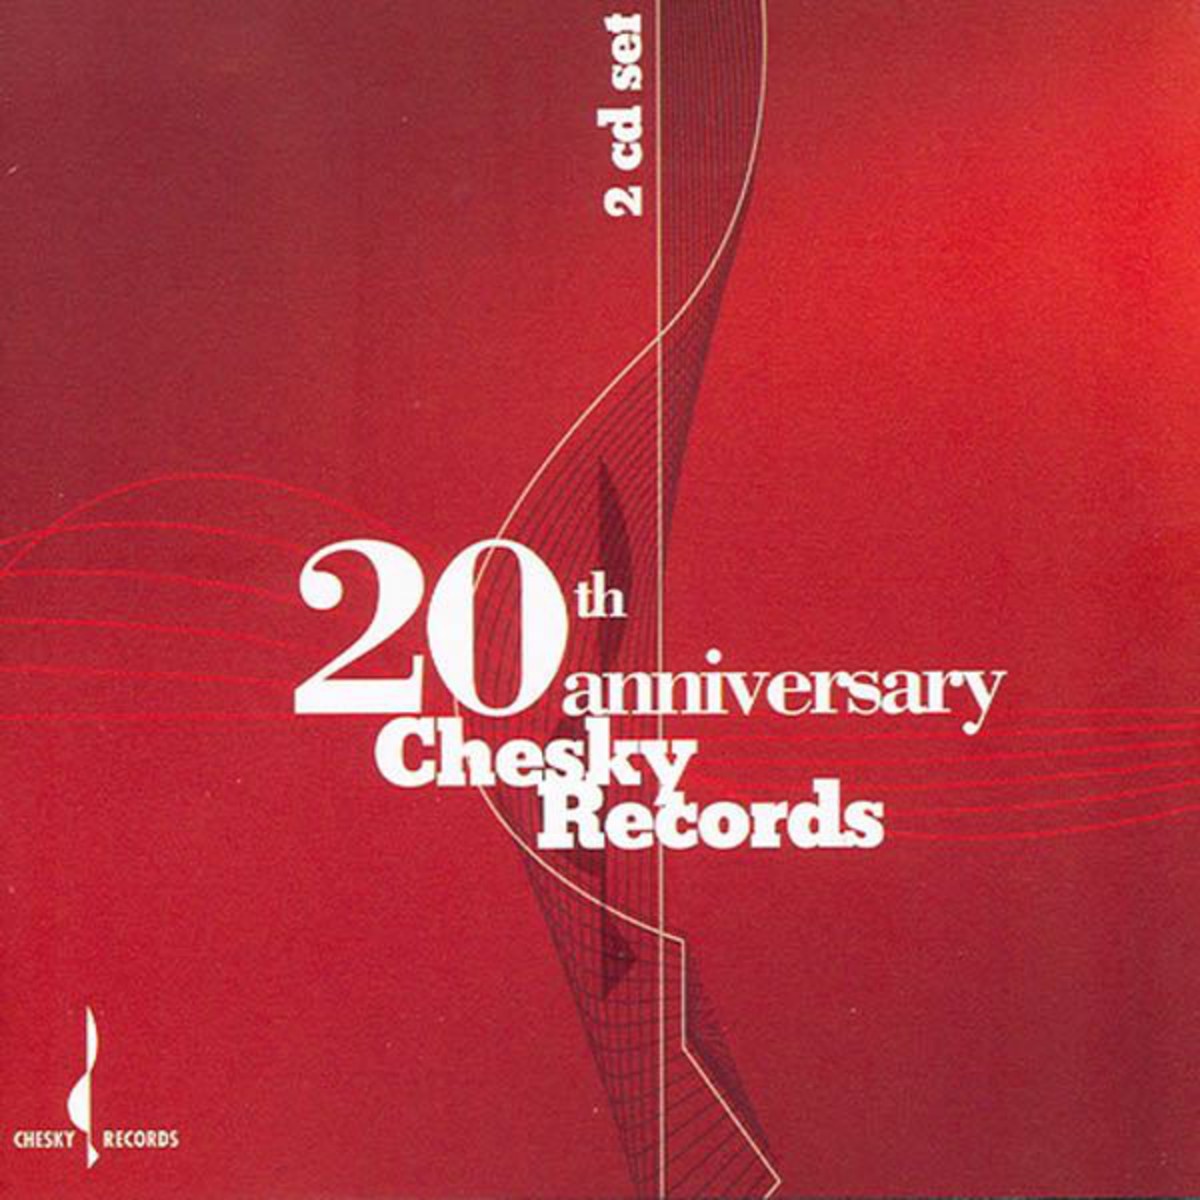 20th Anniversary Chesky Records